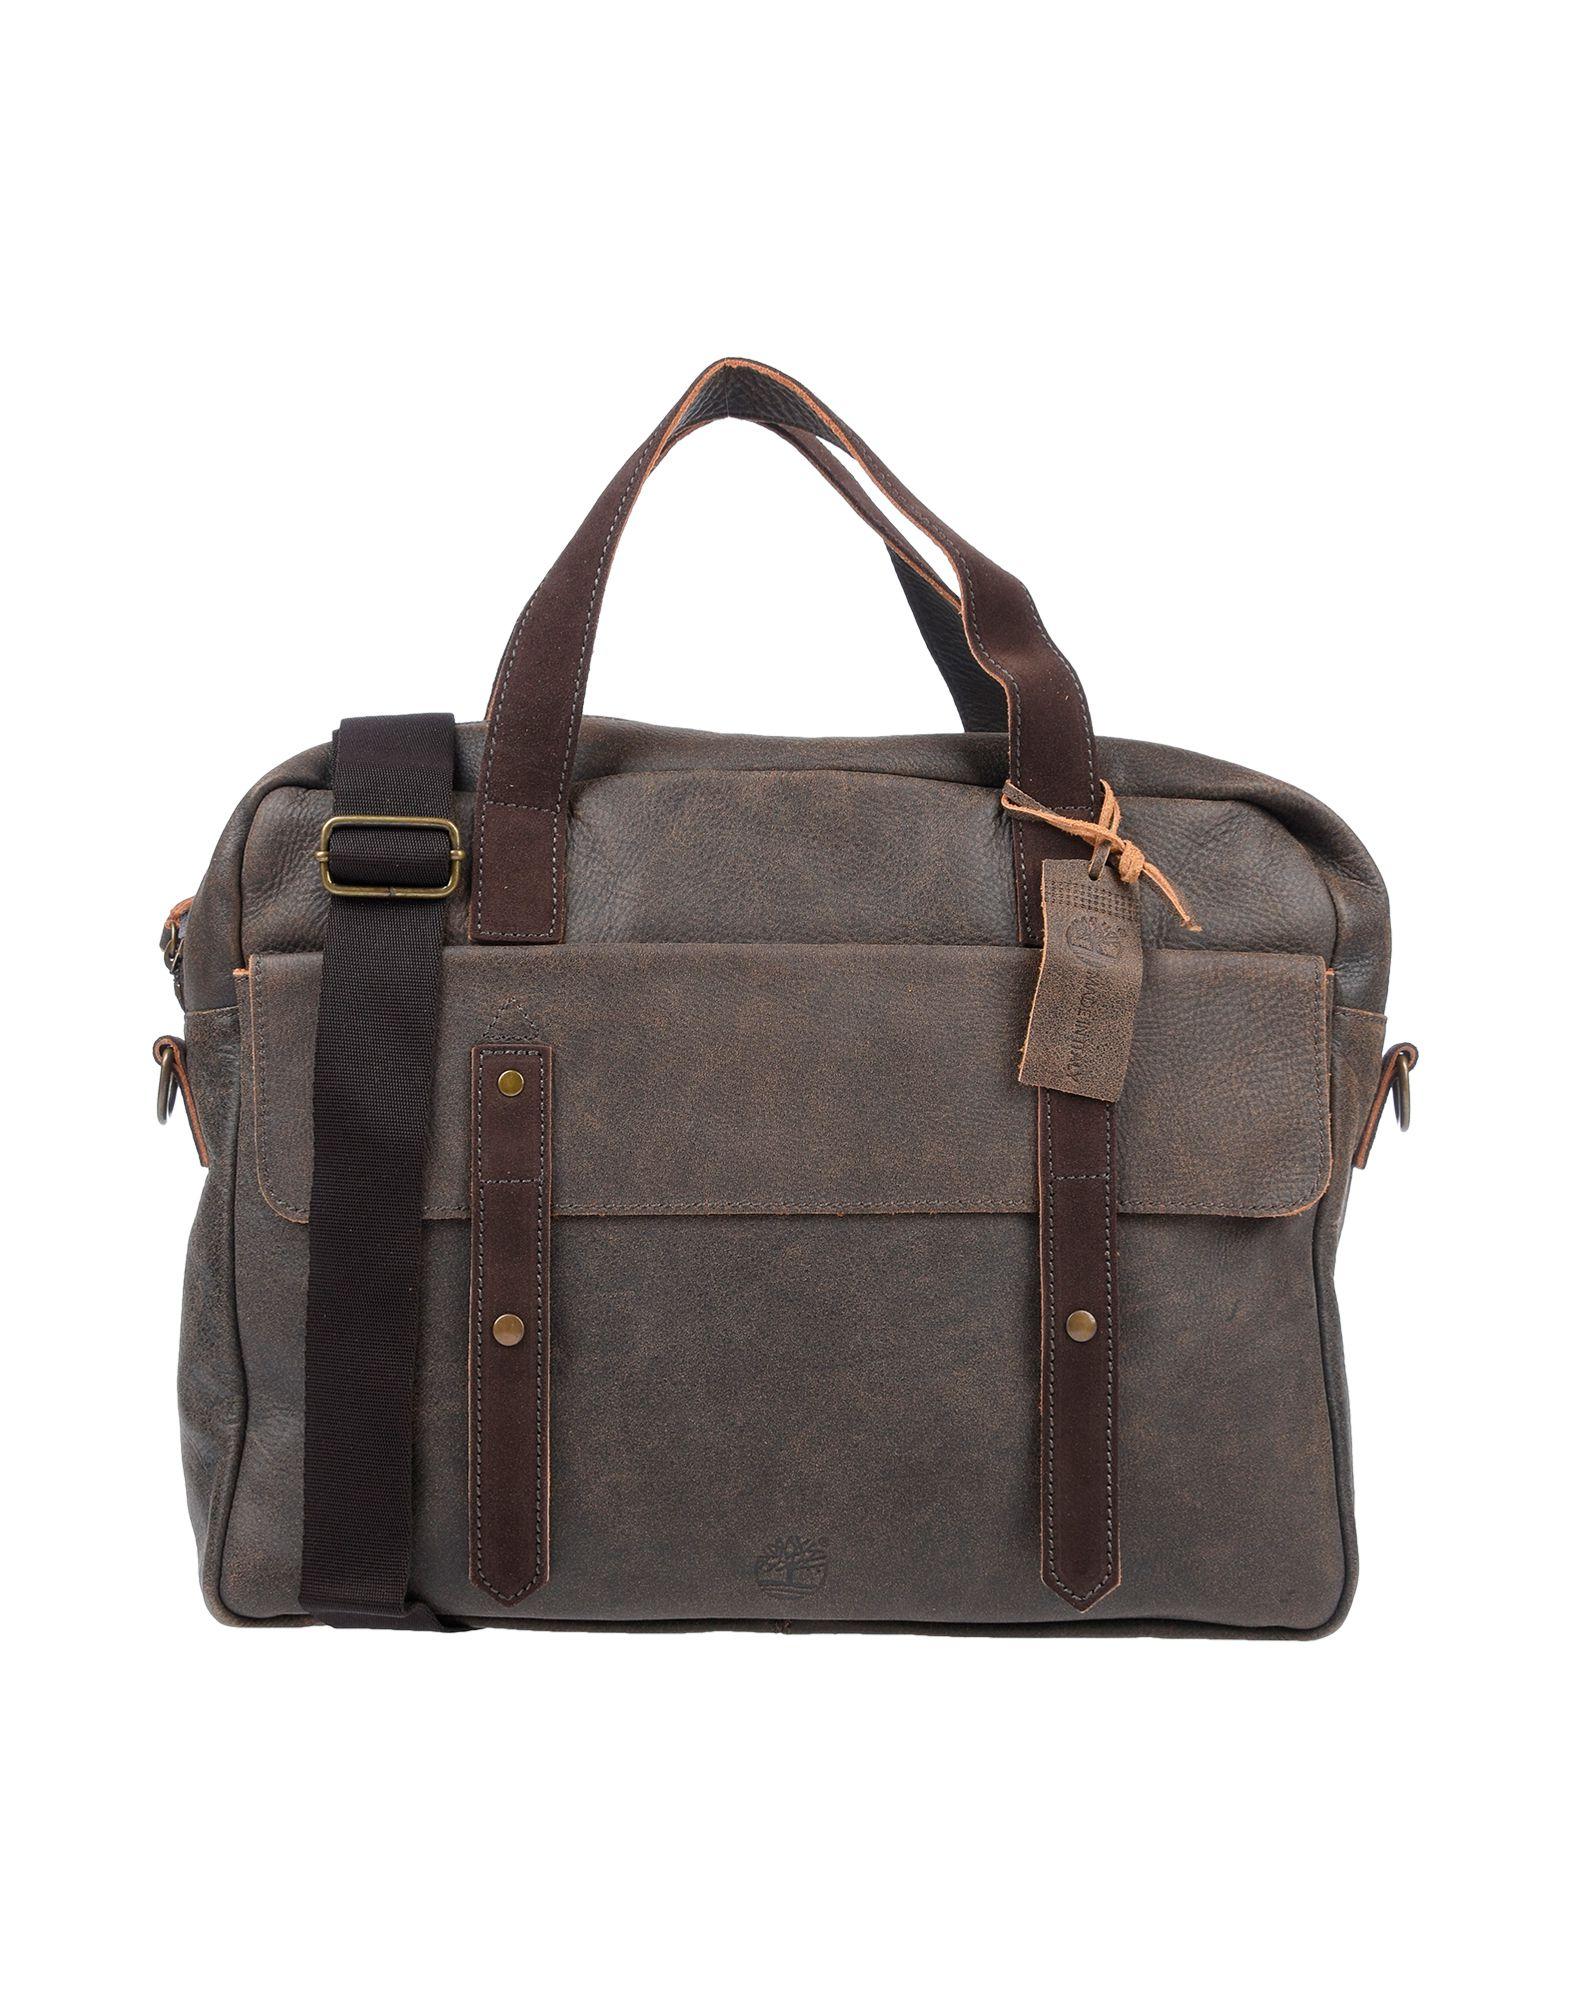 Timberland Leather Handbag in Dark Brown (Brown) for Men - Lyst